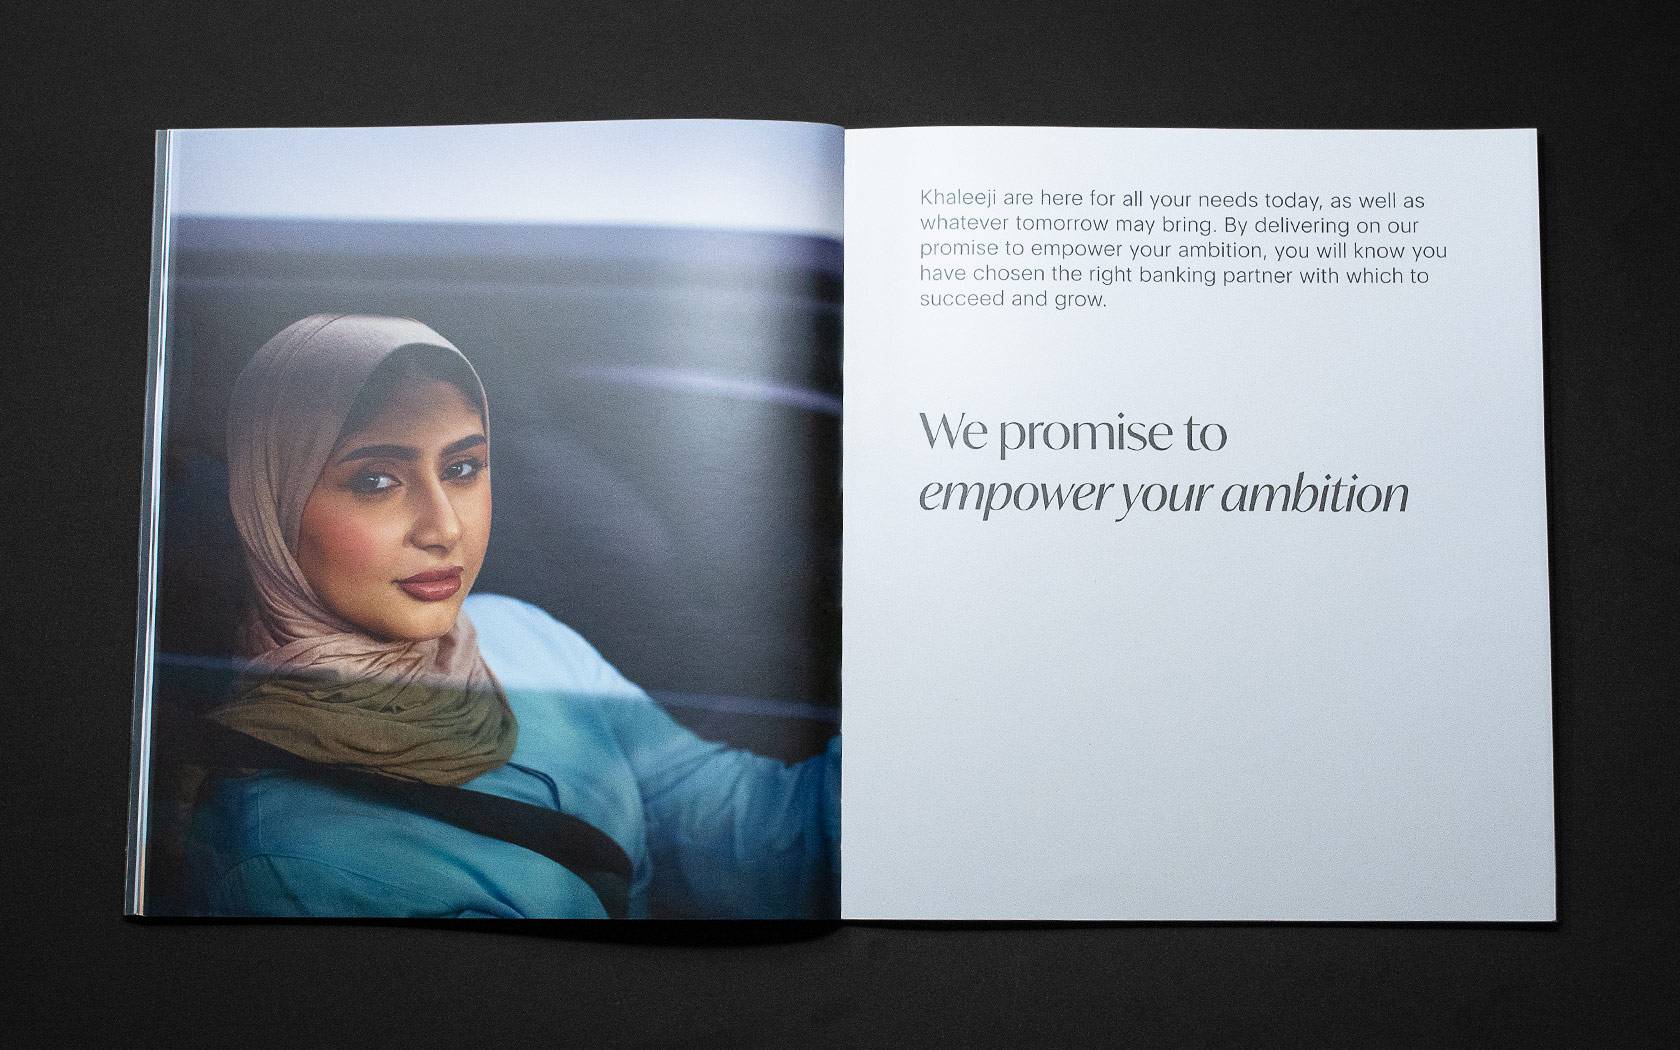 Khaleeji Brand Book. Lady in a car image with headline and body copy